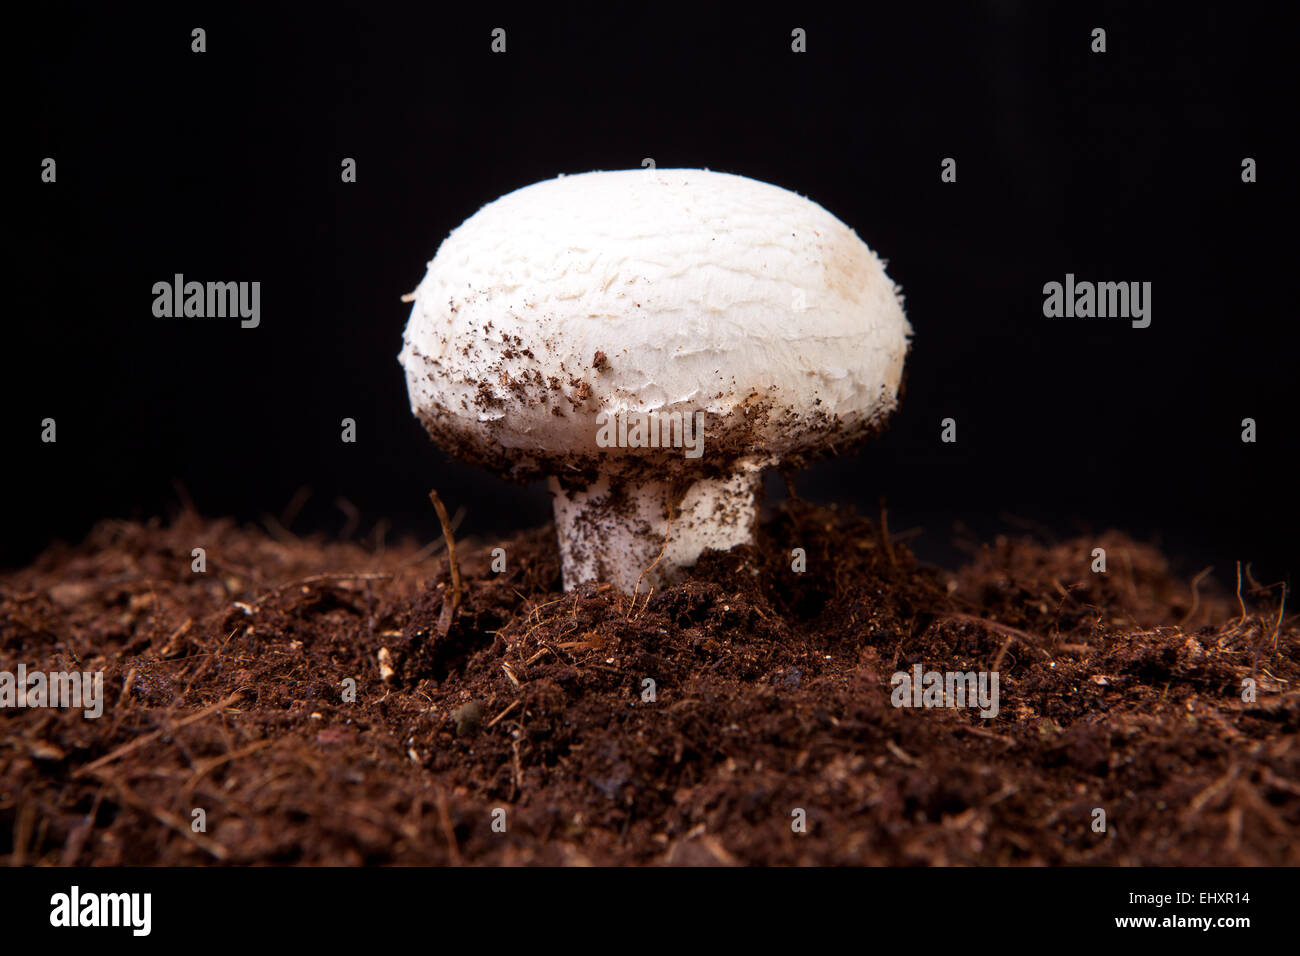 White mushroom growing over black soil. Isolated over black background Stock Photo